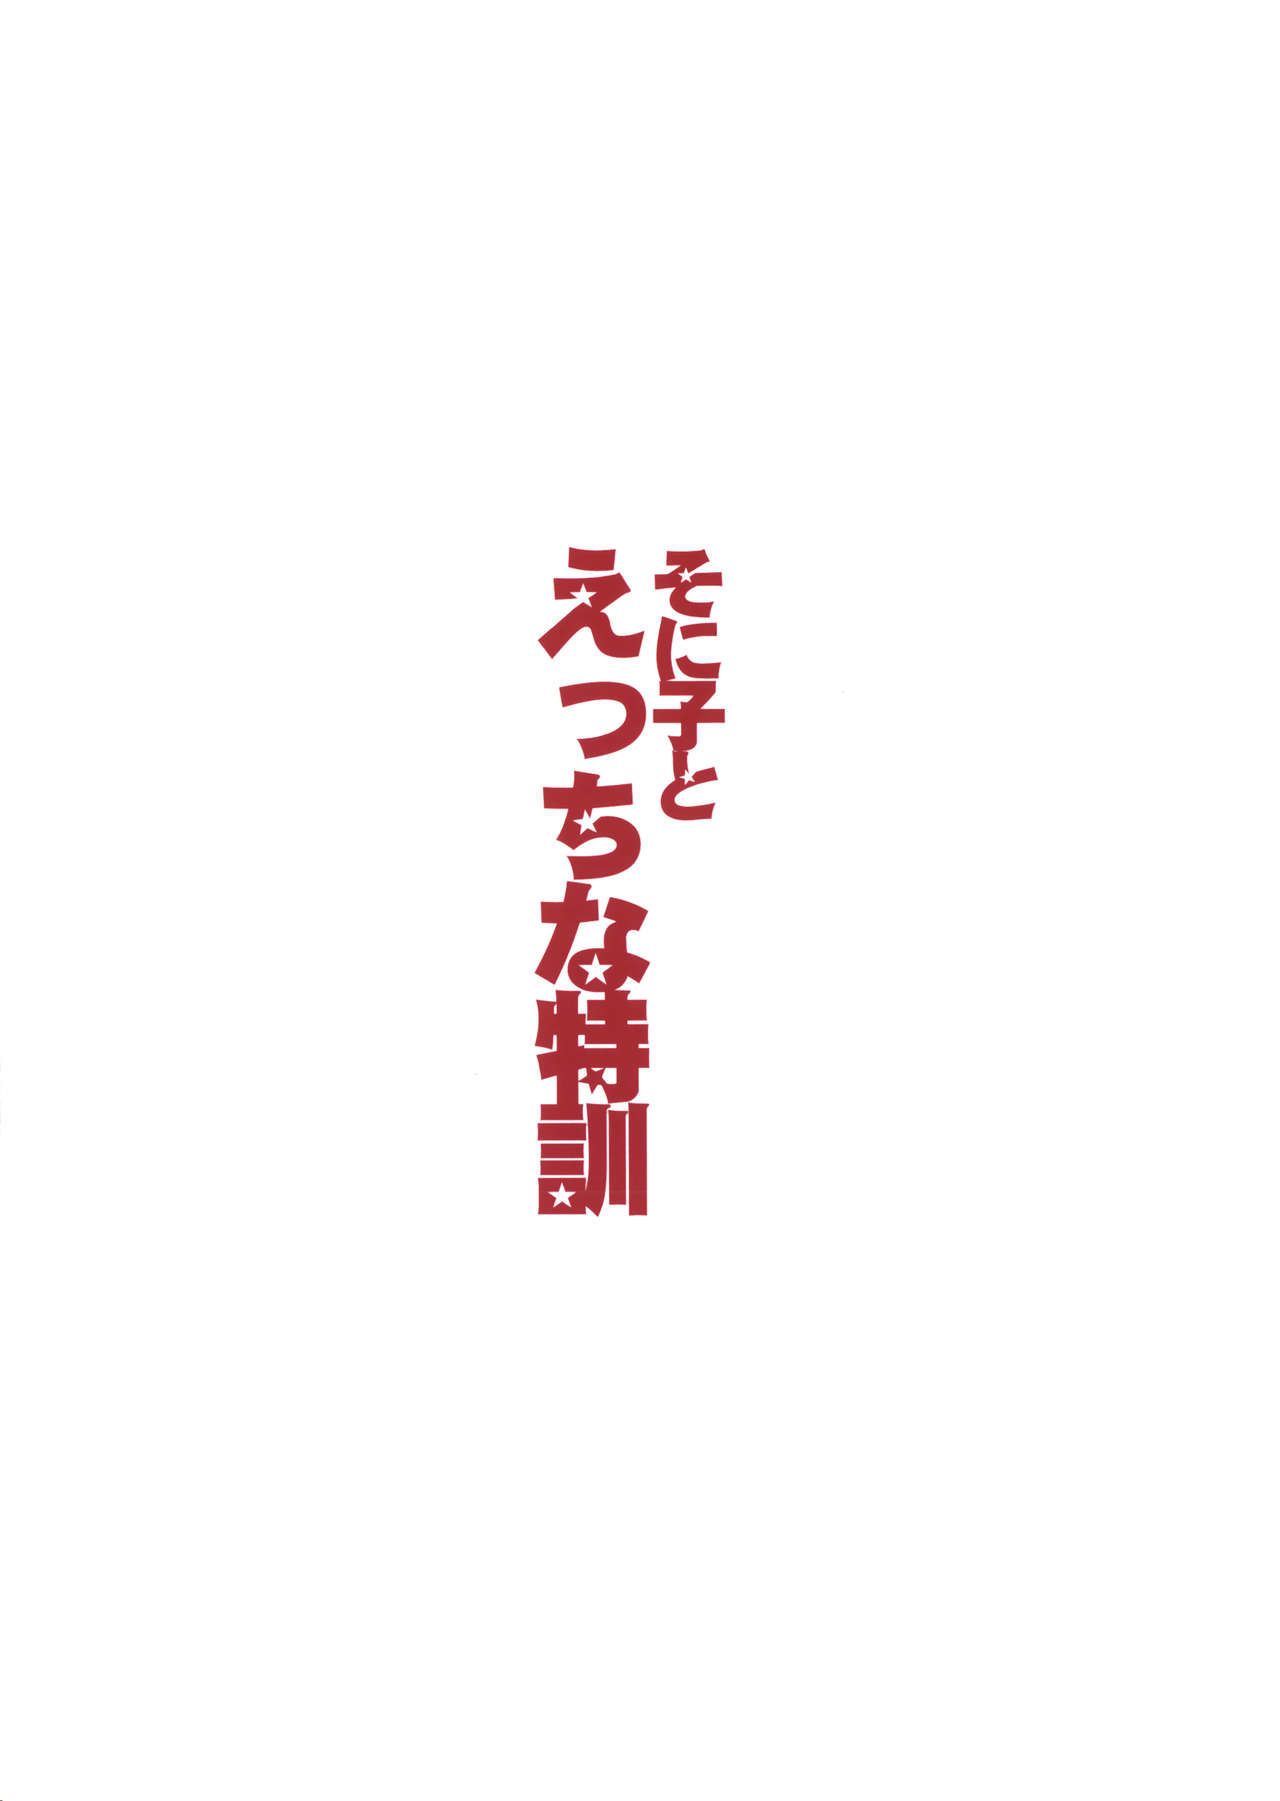 (sc63) สีแดง มงกุฎ (ishigami kazui) Sonico ต้อง Ecchi นา tokkun Lewd การฝึก กับ Sonico (super sonico) biribiri